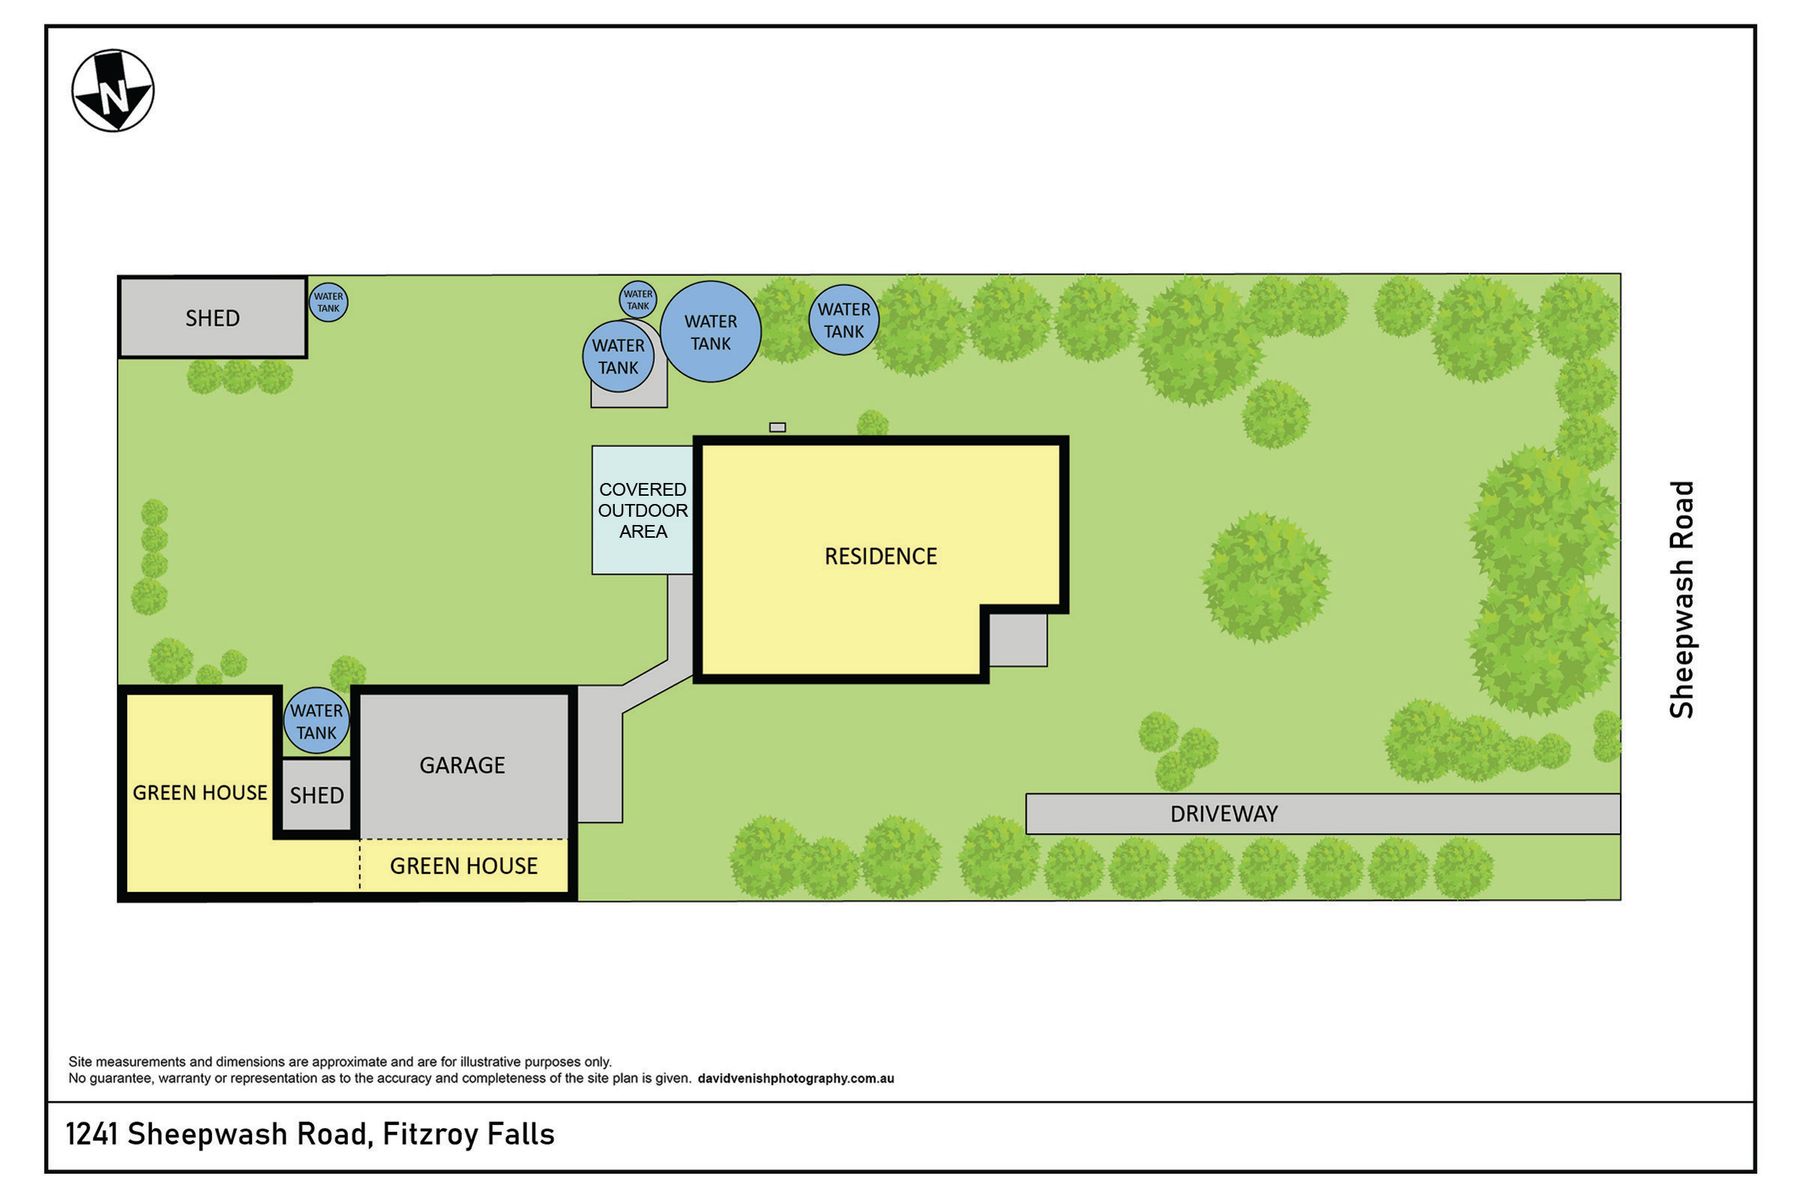 1241 Sheepwash Road, Fitzroy Falls   Site Plan